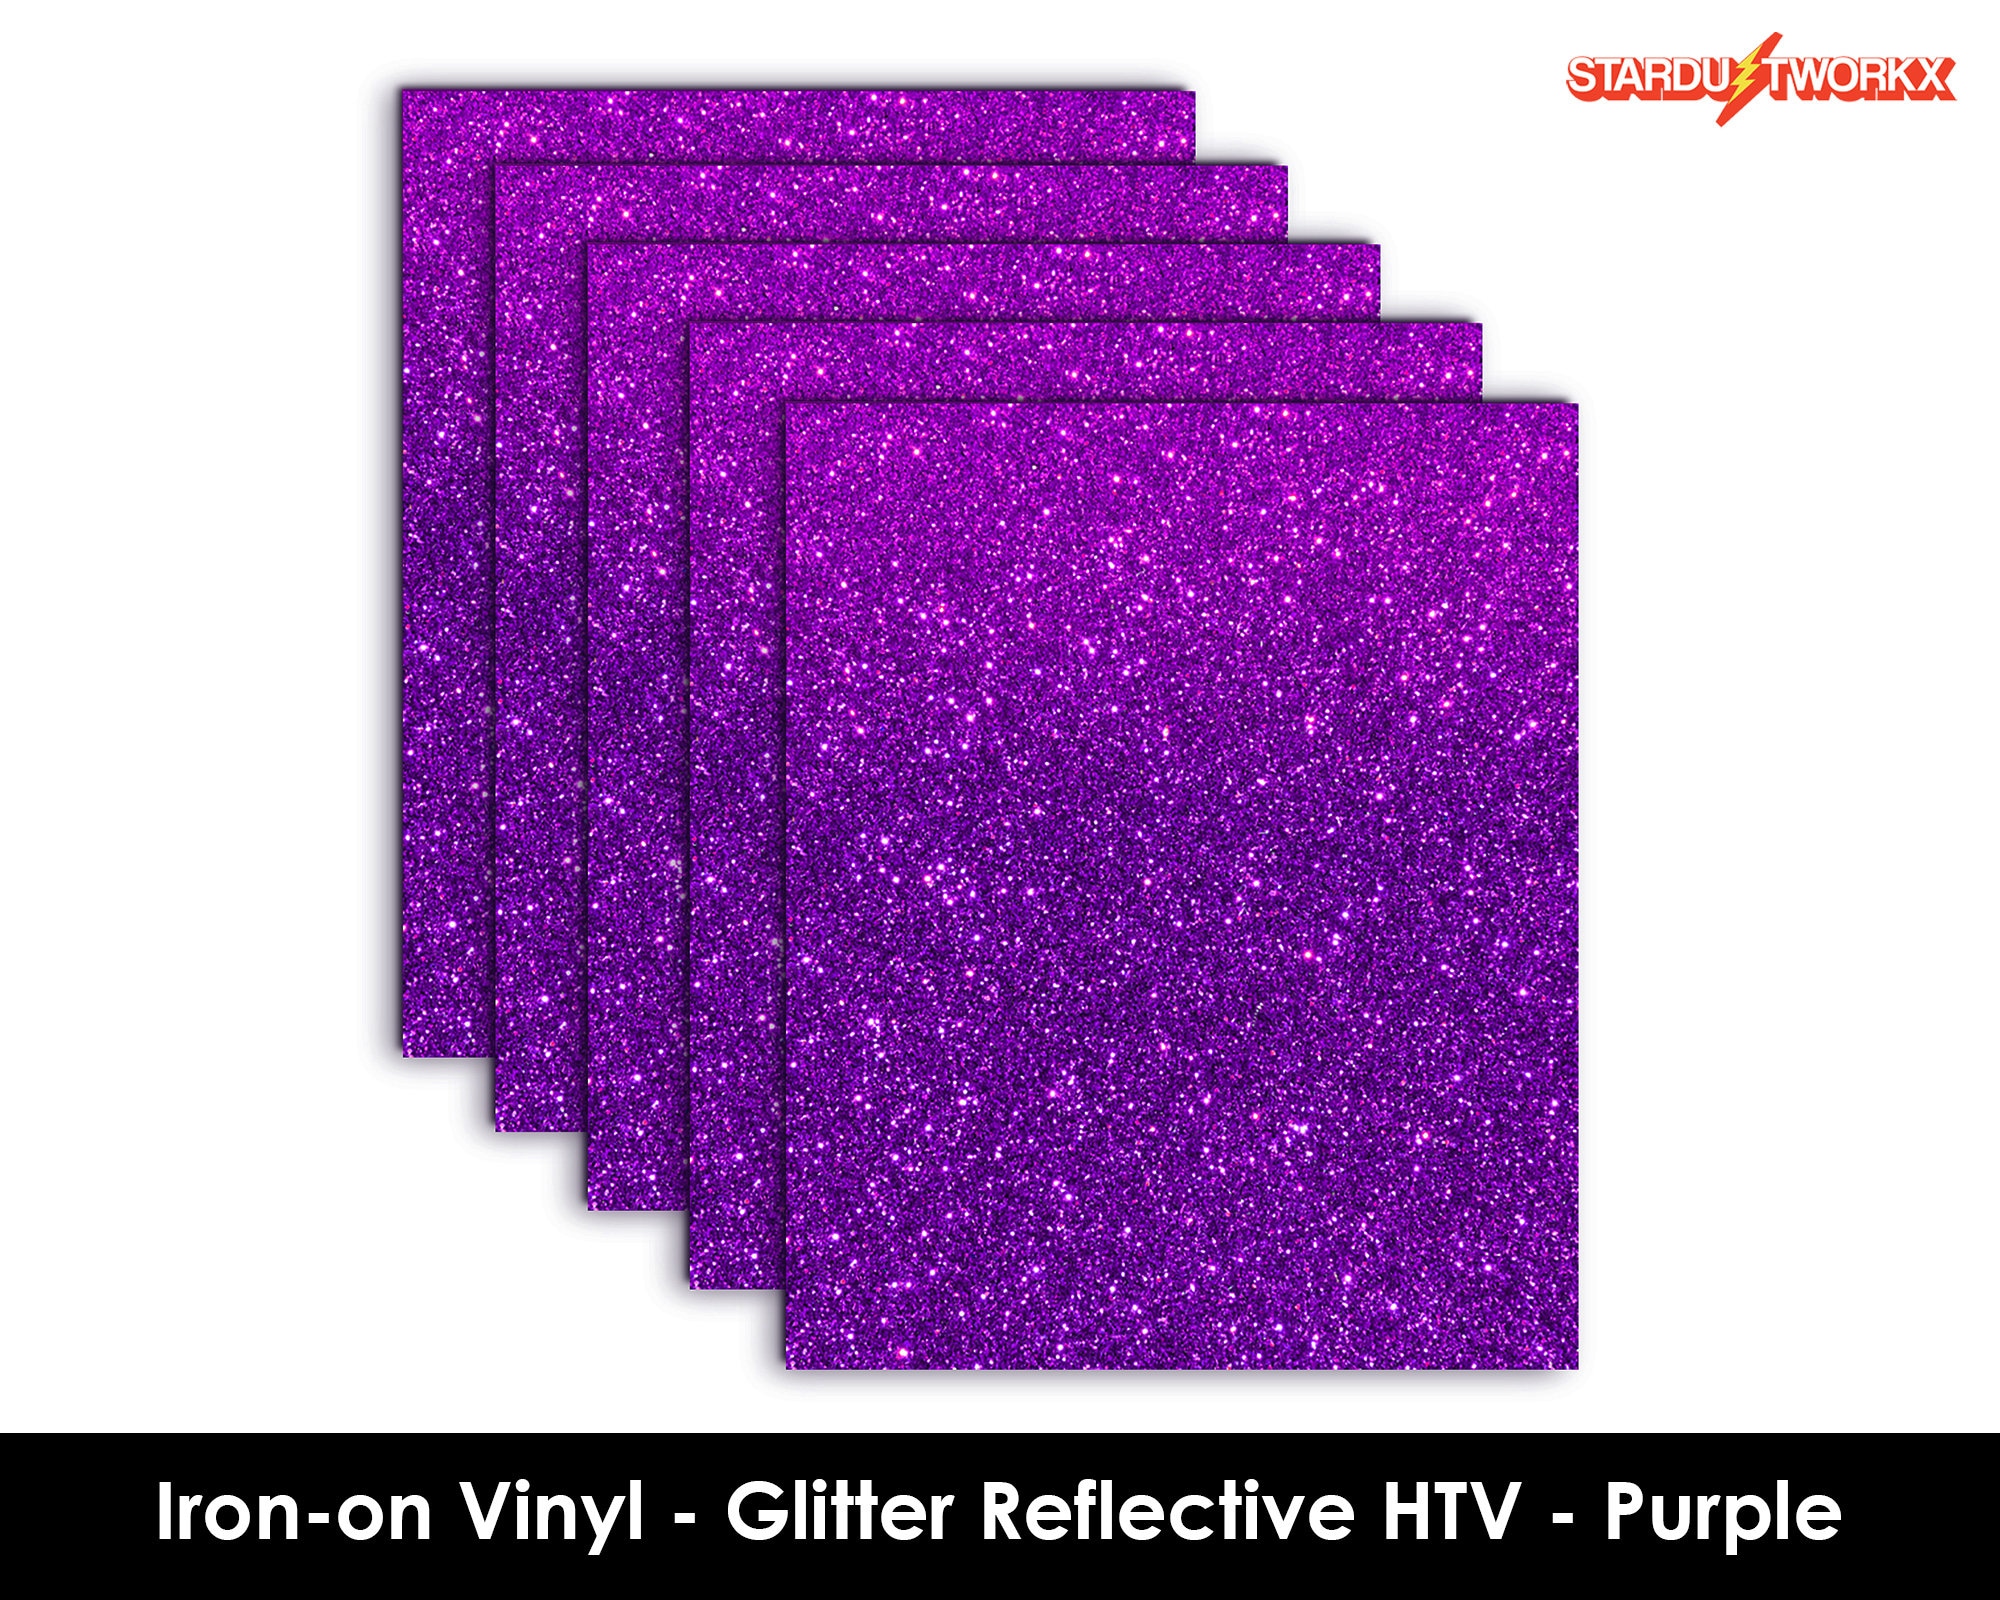 Stardustworkx Glitter Reflective HTV Purple 10 X 12 Heat Transfer Vinyl for  T-shirts Iron on Vinyl Bundle Sheets Cricut Silhouette Cameo 